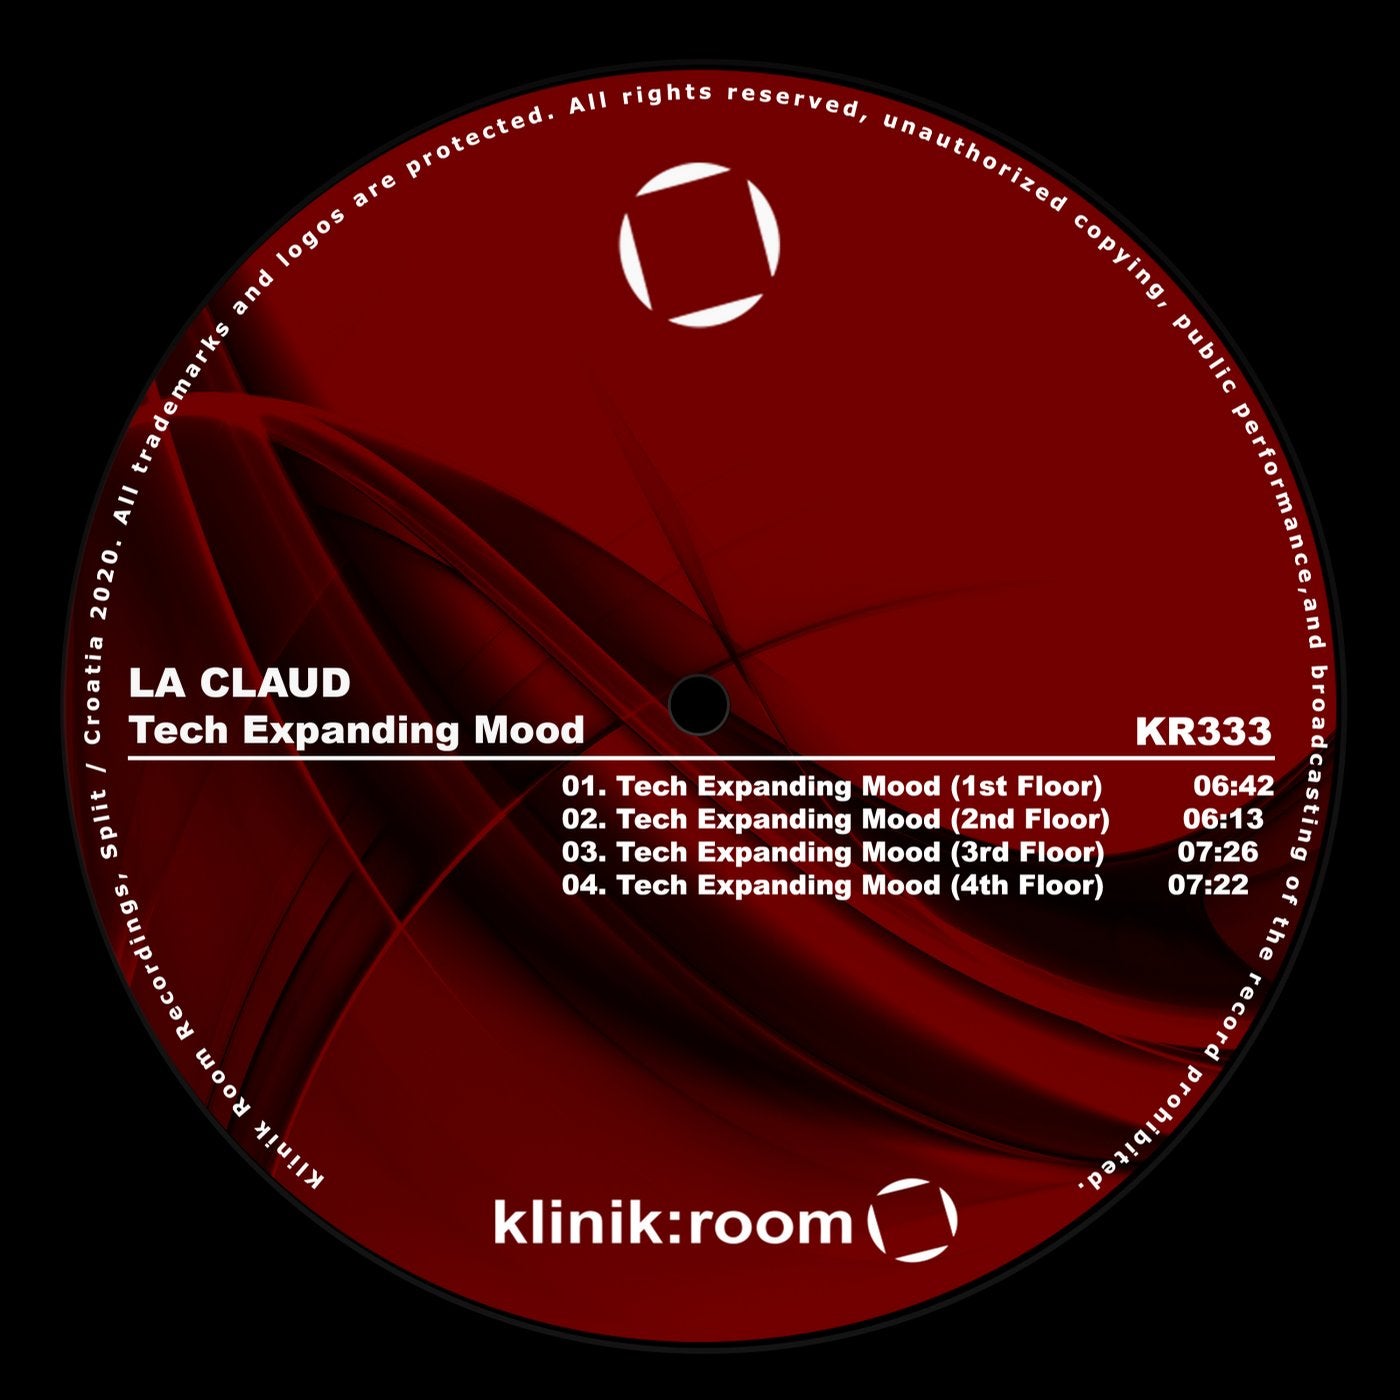 La Claud music download - Beatport